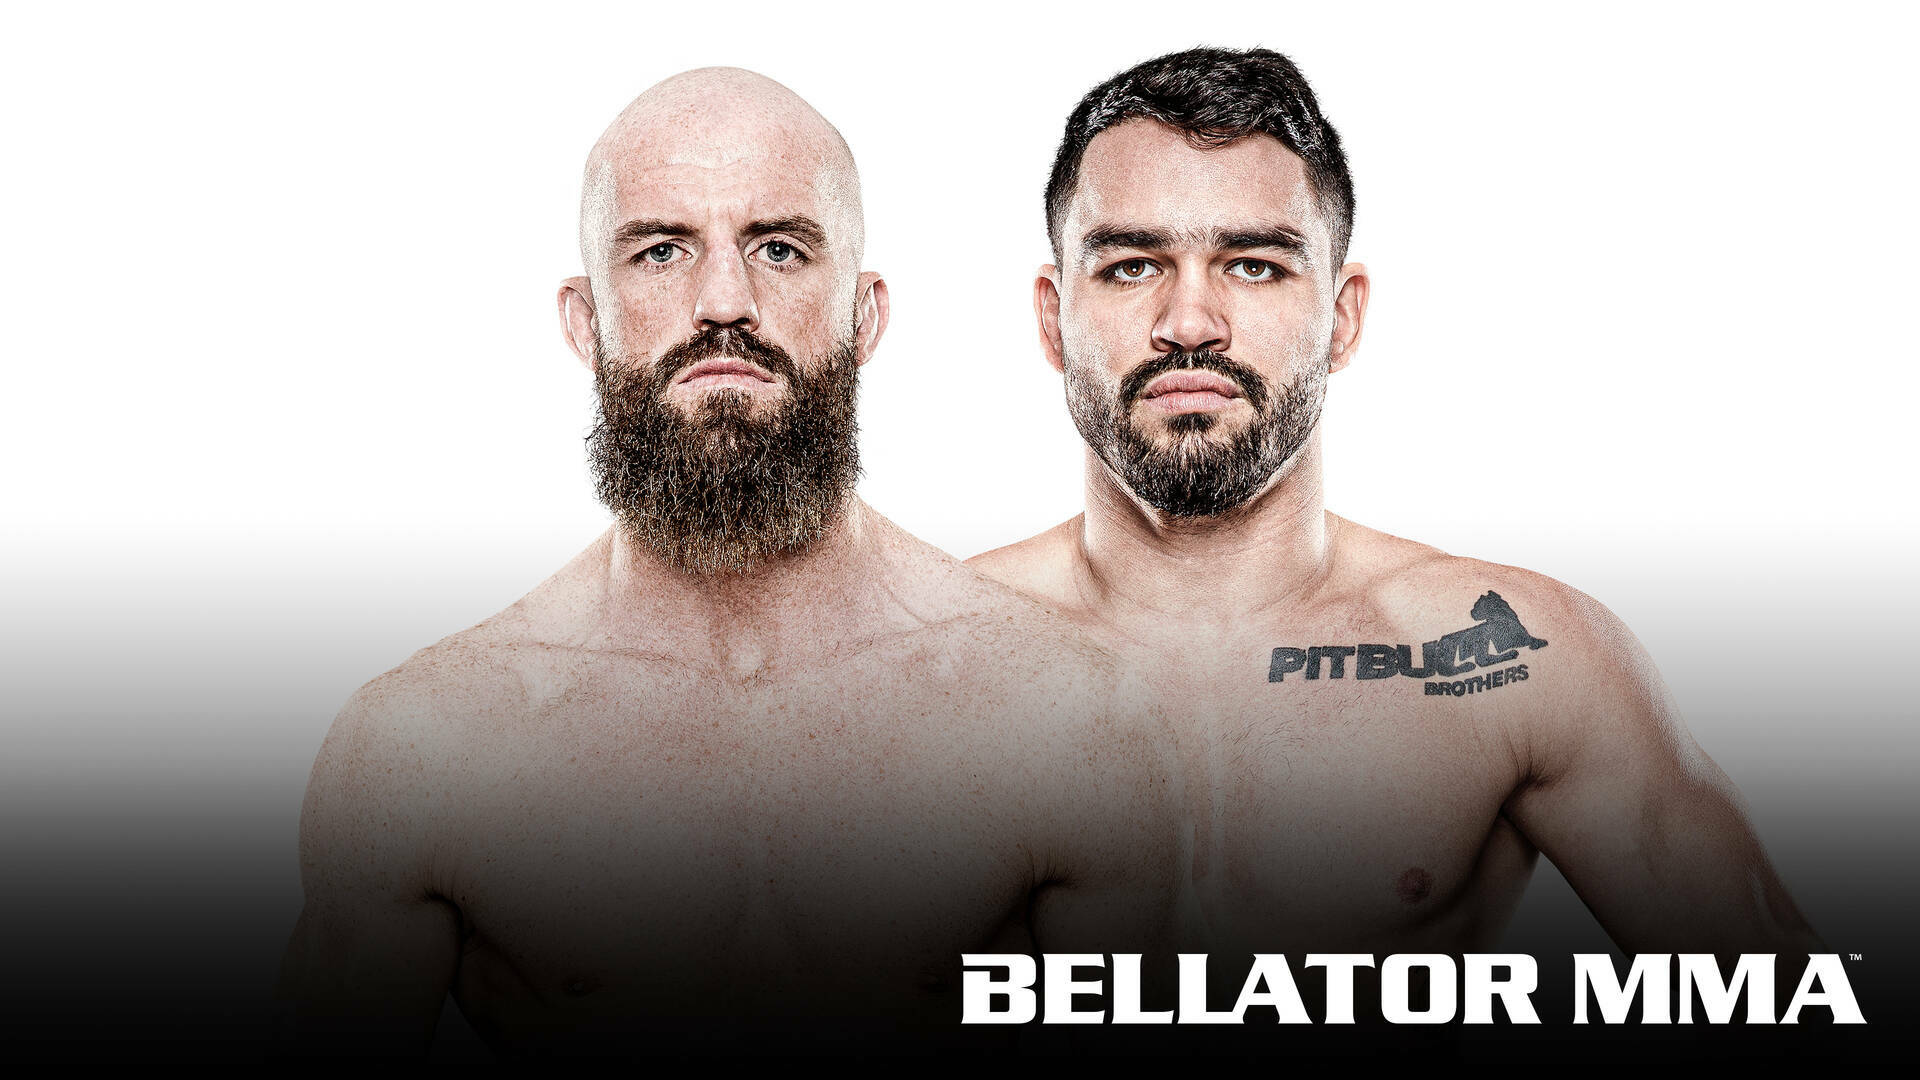 Watch Bellator MMA Season 2021 BELLATOR MMA 270 Queally vs